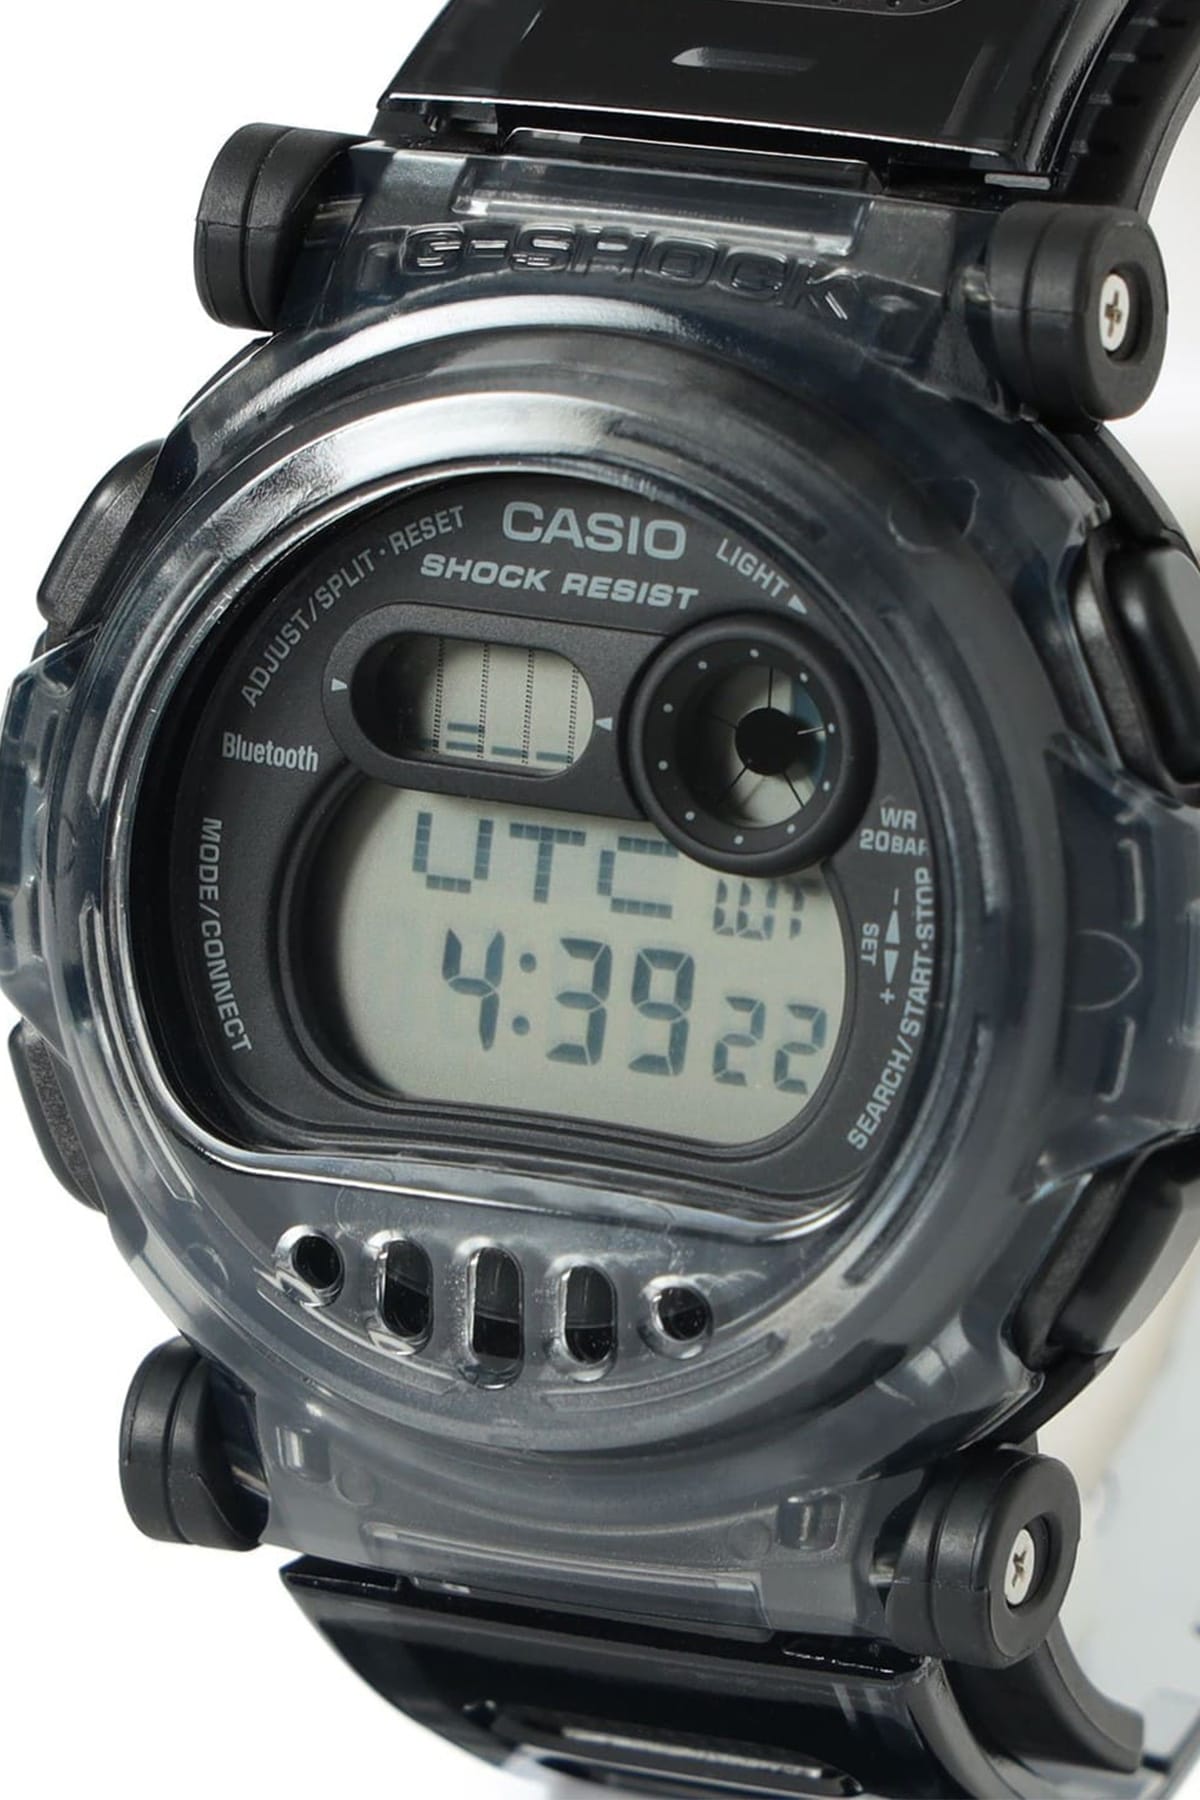 BEAMS x G-Shock 全新聯名系列錶款正式發佈| Hypebeast